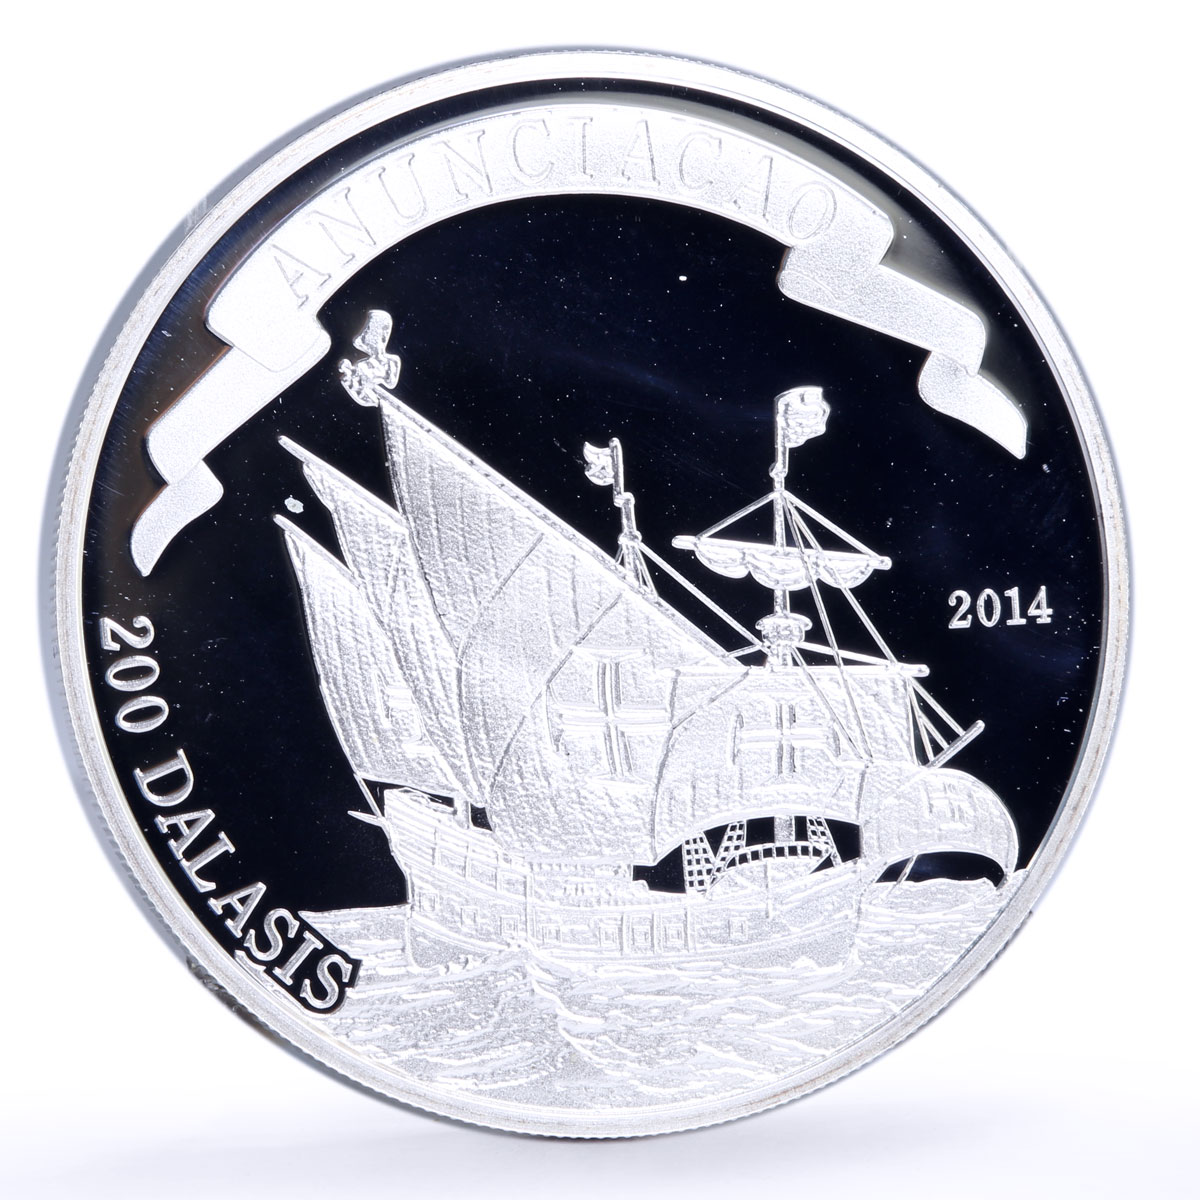 Gambia 200 dalasis Seafaring Anunciacao Ship Clipper proof silver coin 2014